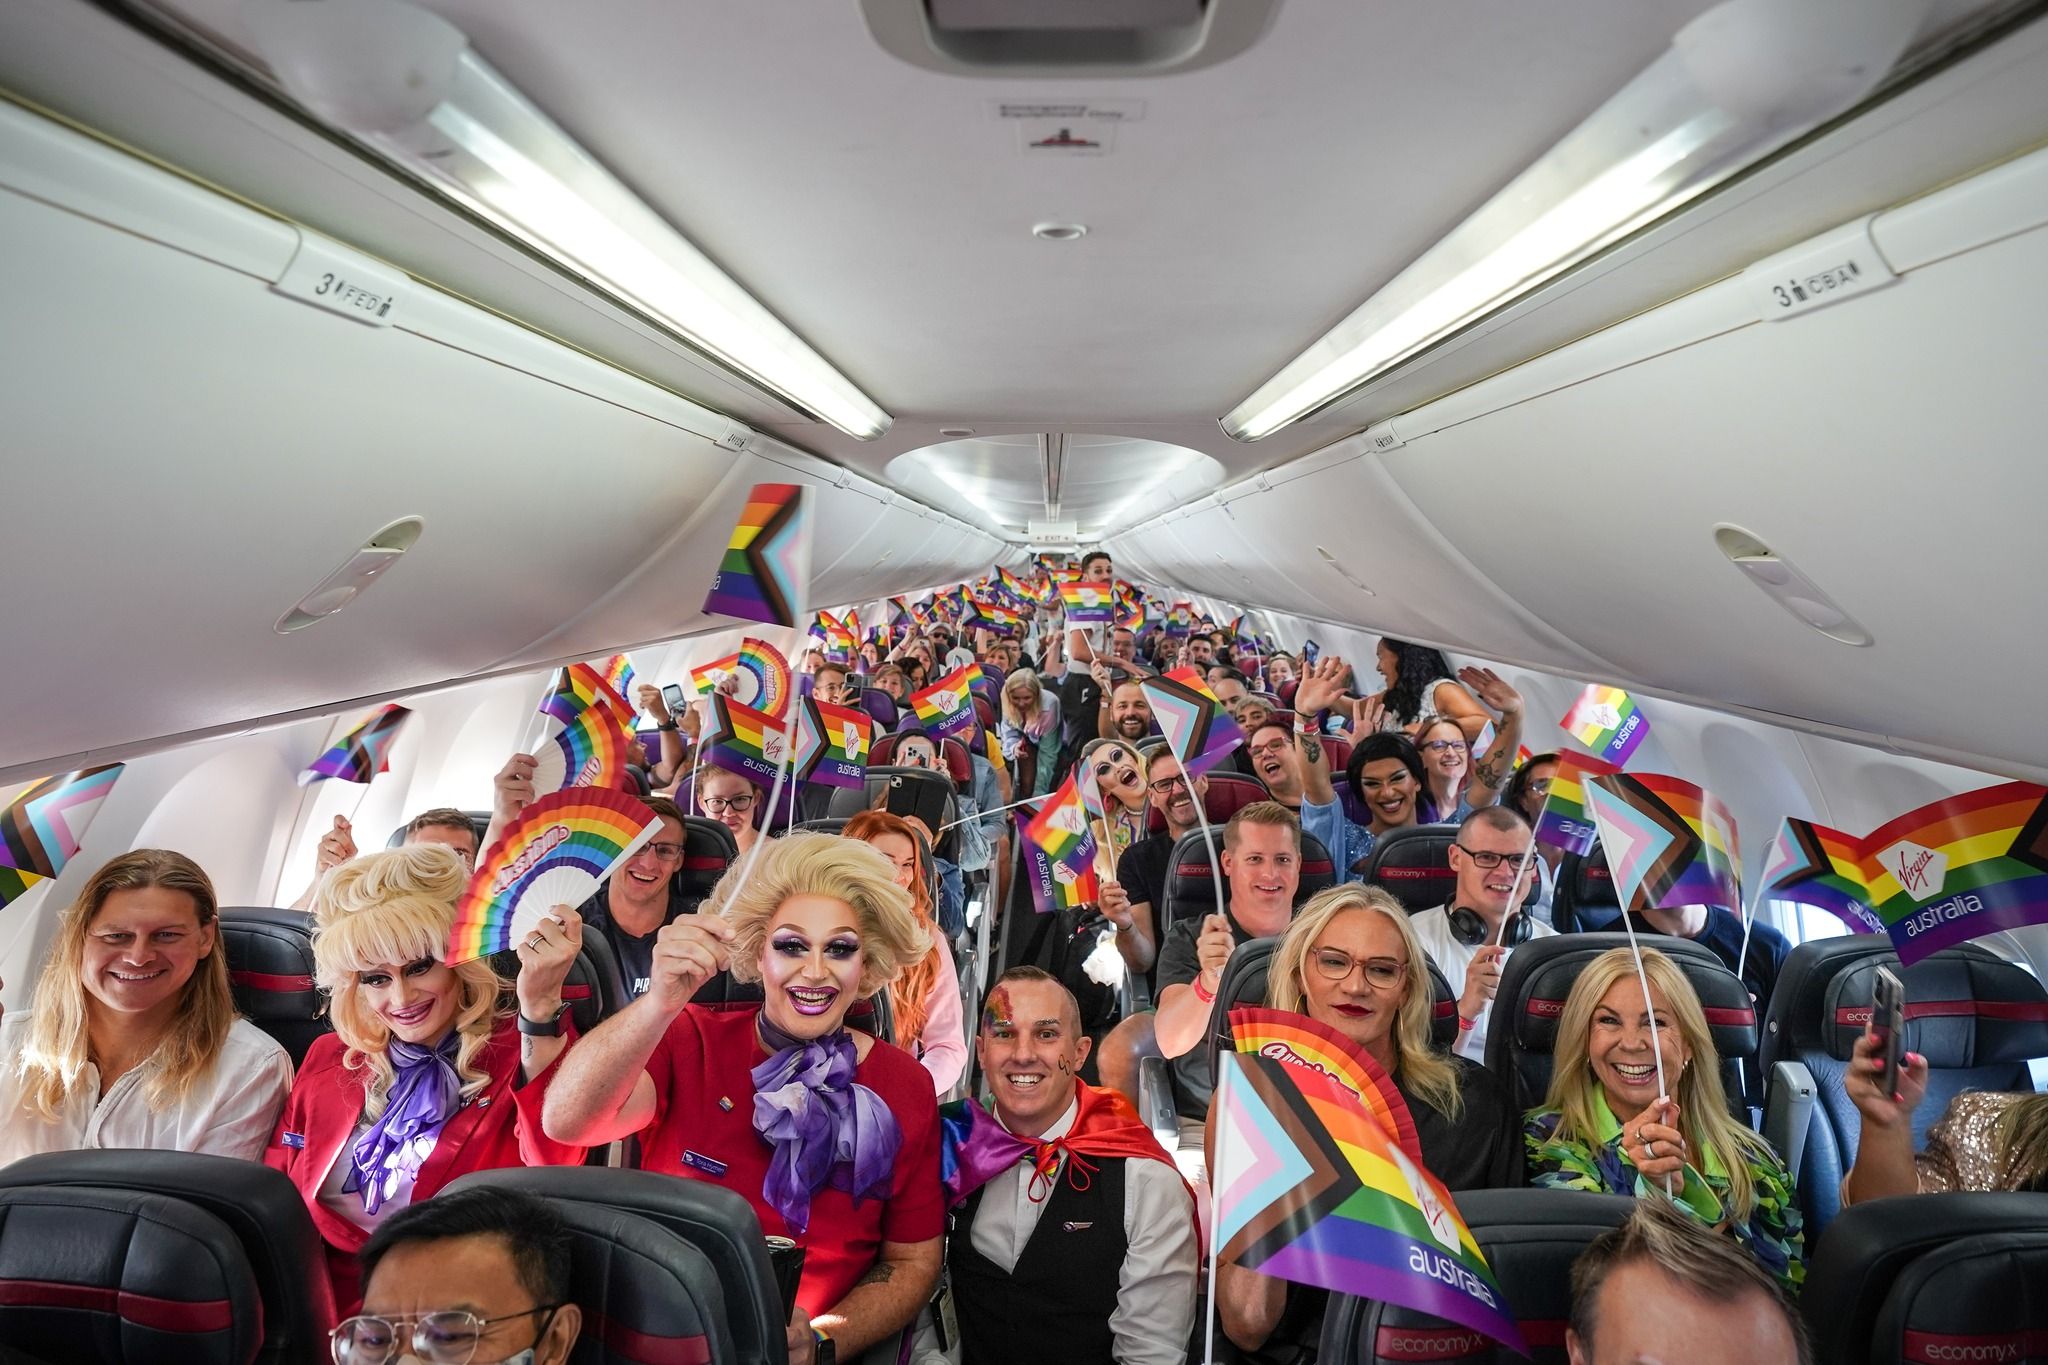 The Virgin Australia Pride flight from Perth